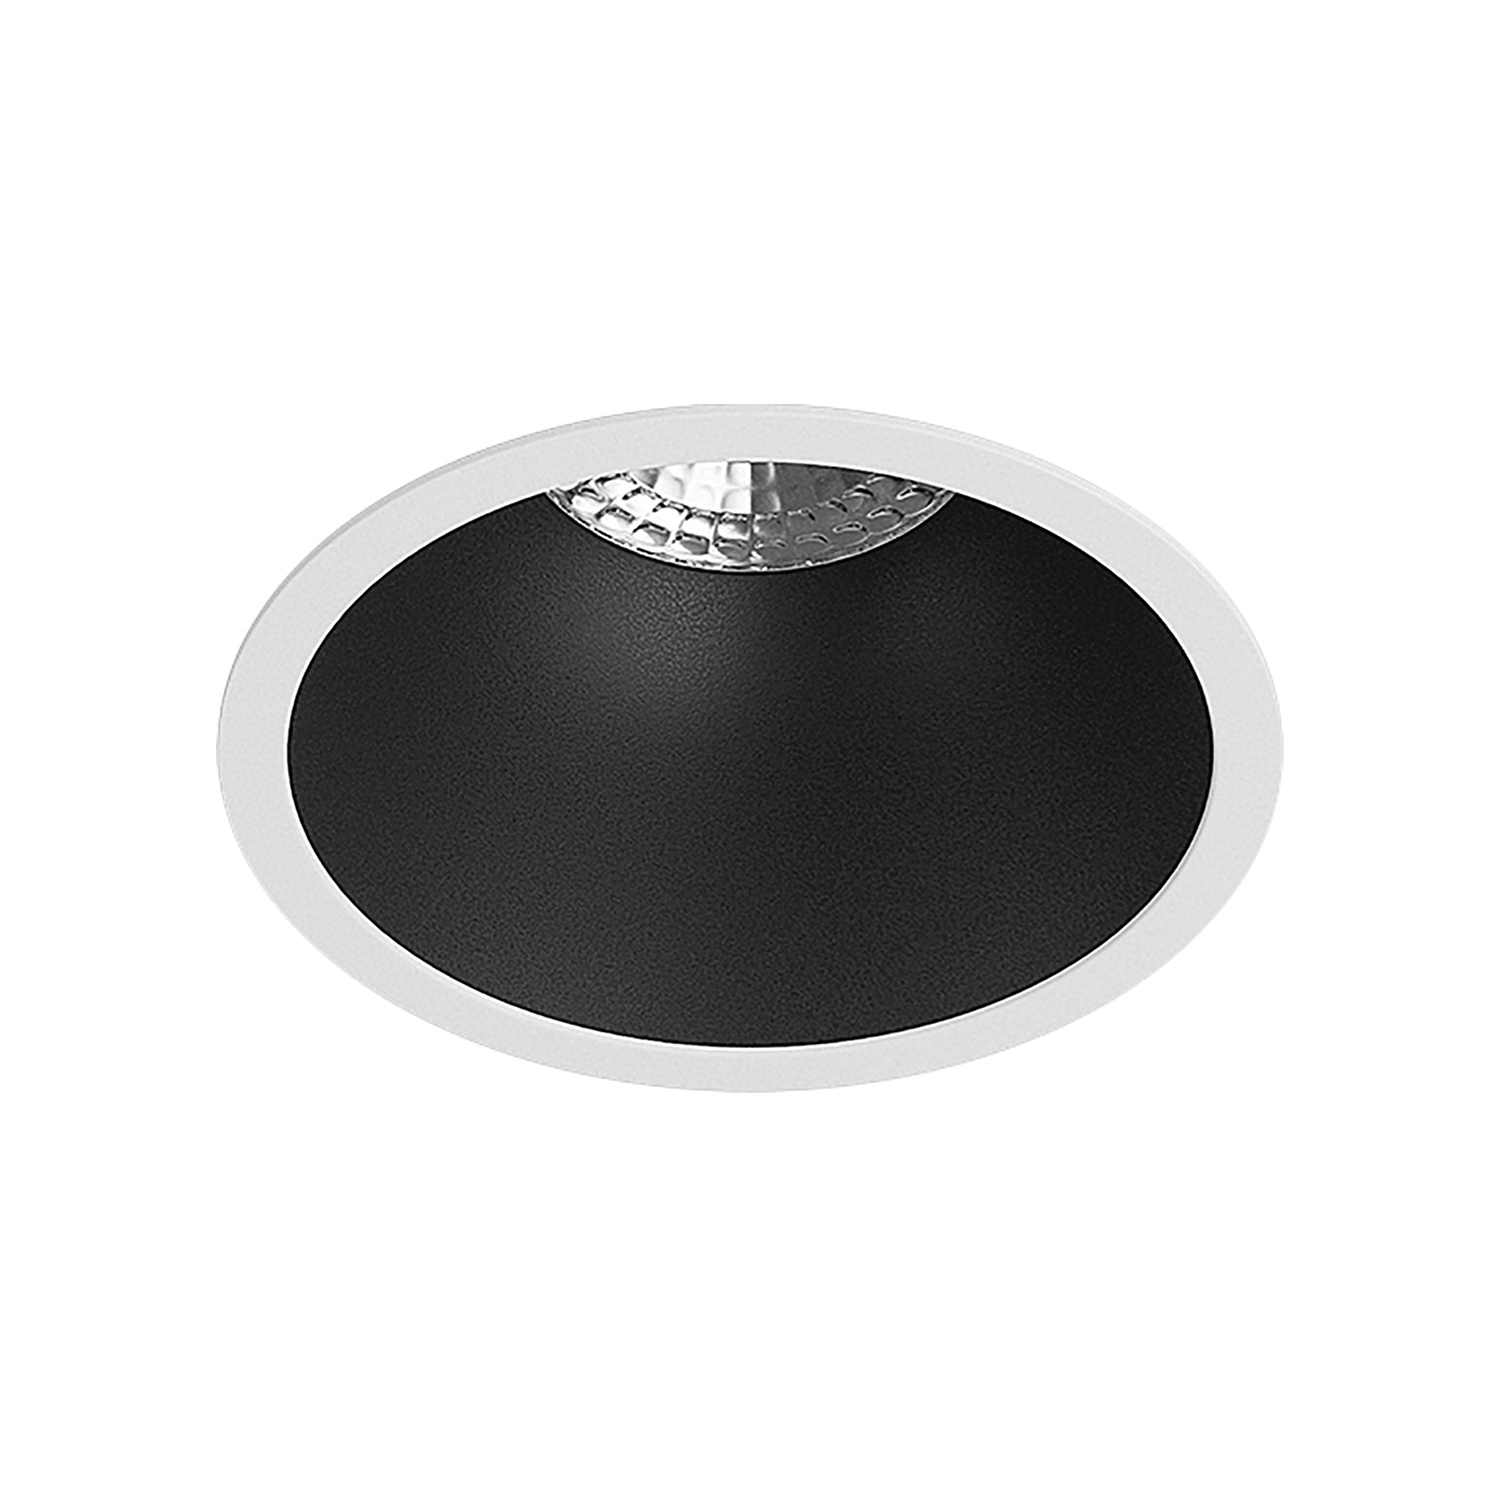 Встраиваемый светильник GU5.3 LED белый/черный пластик Denkirs DK3026-WB DK3026-WB